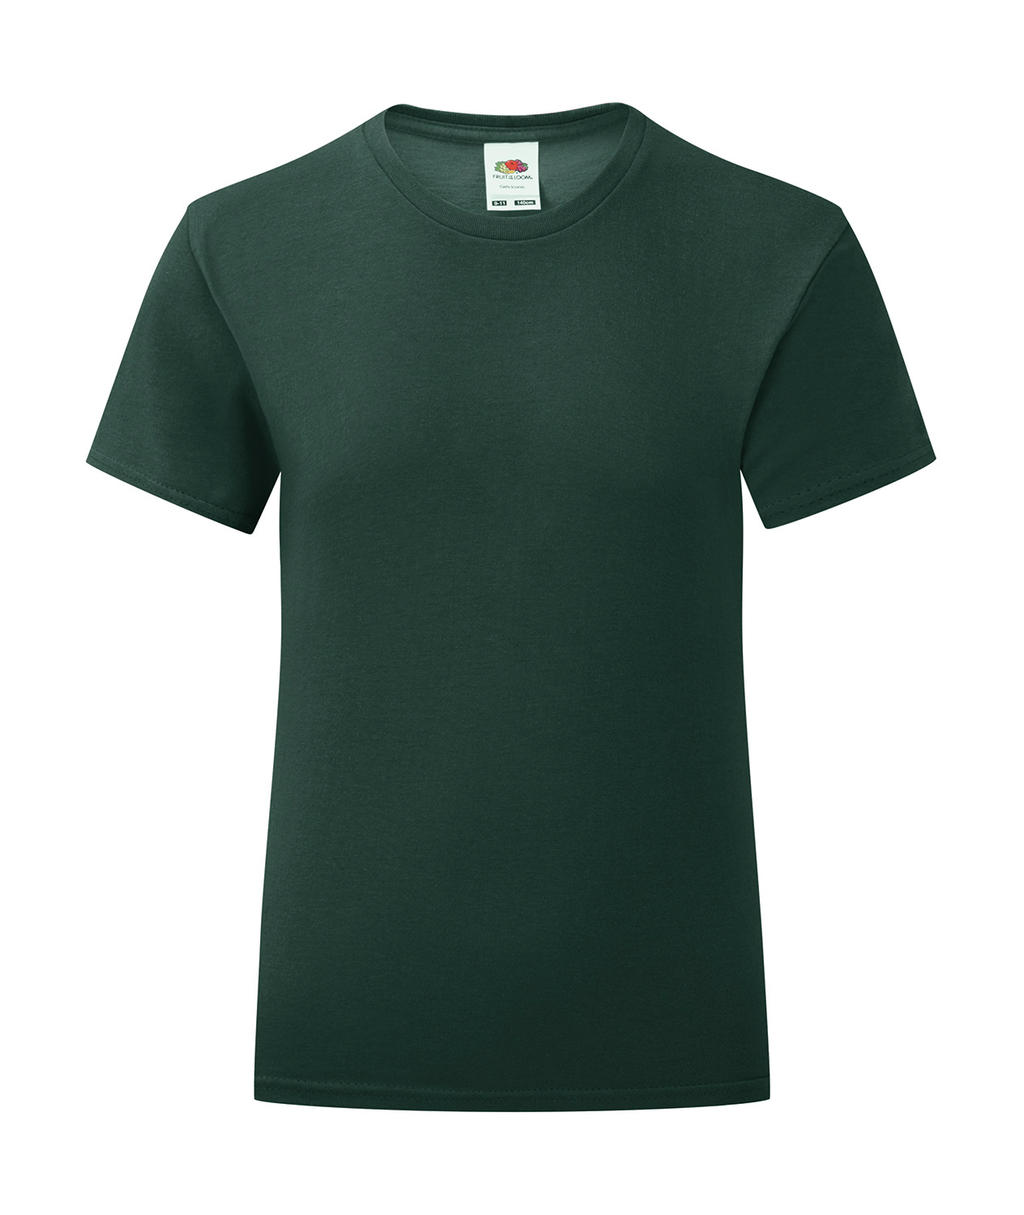 Dívčí tričko Iconic T 150 Barva: military, Velikost: 5-6 let